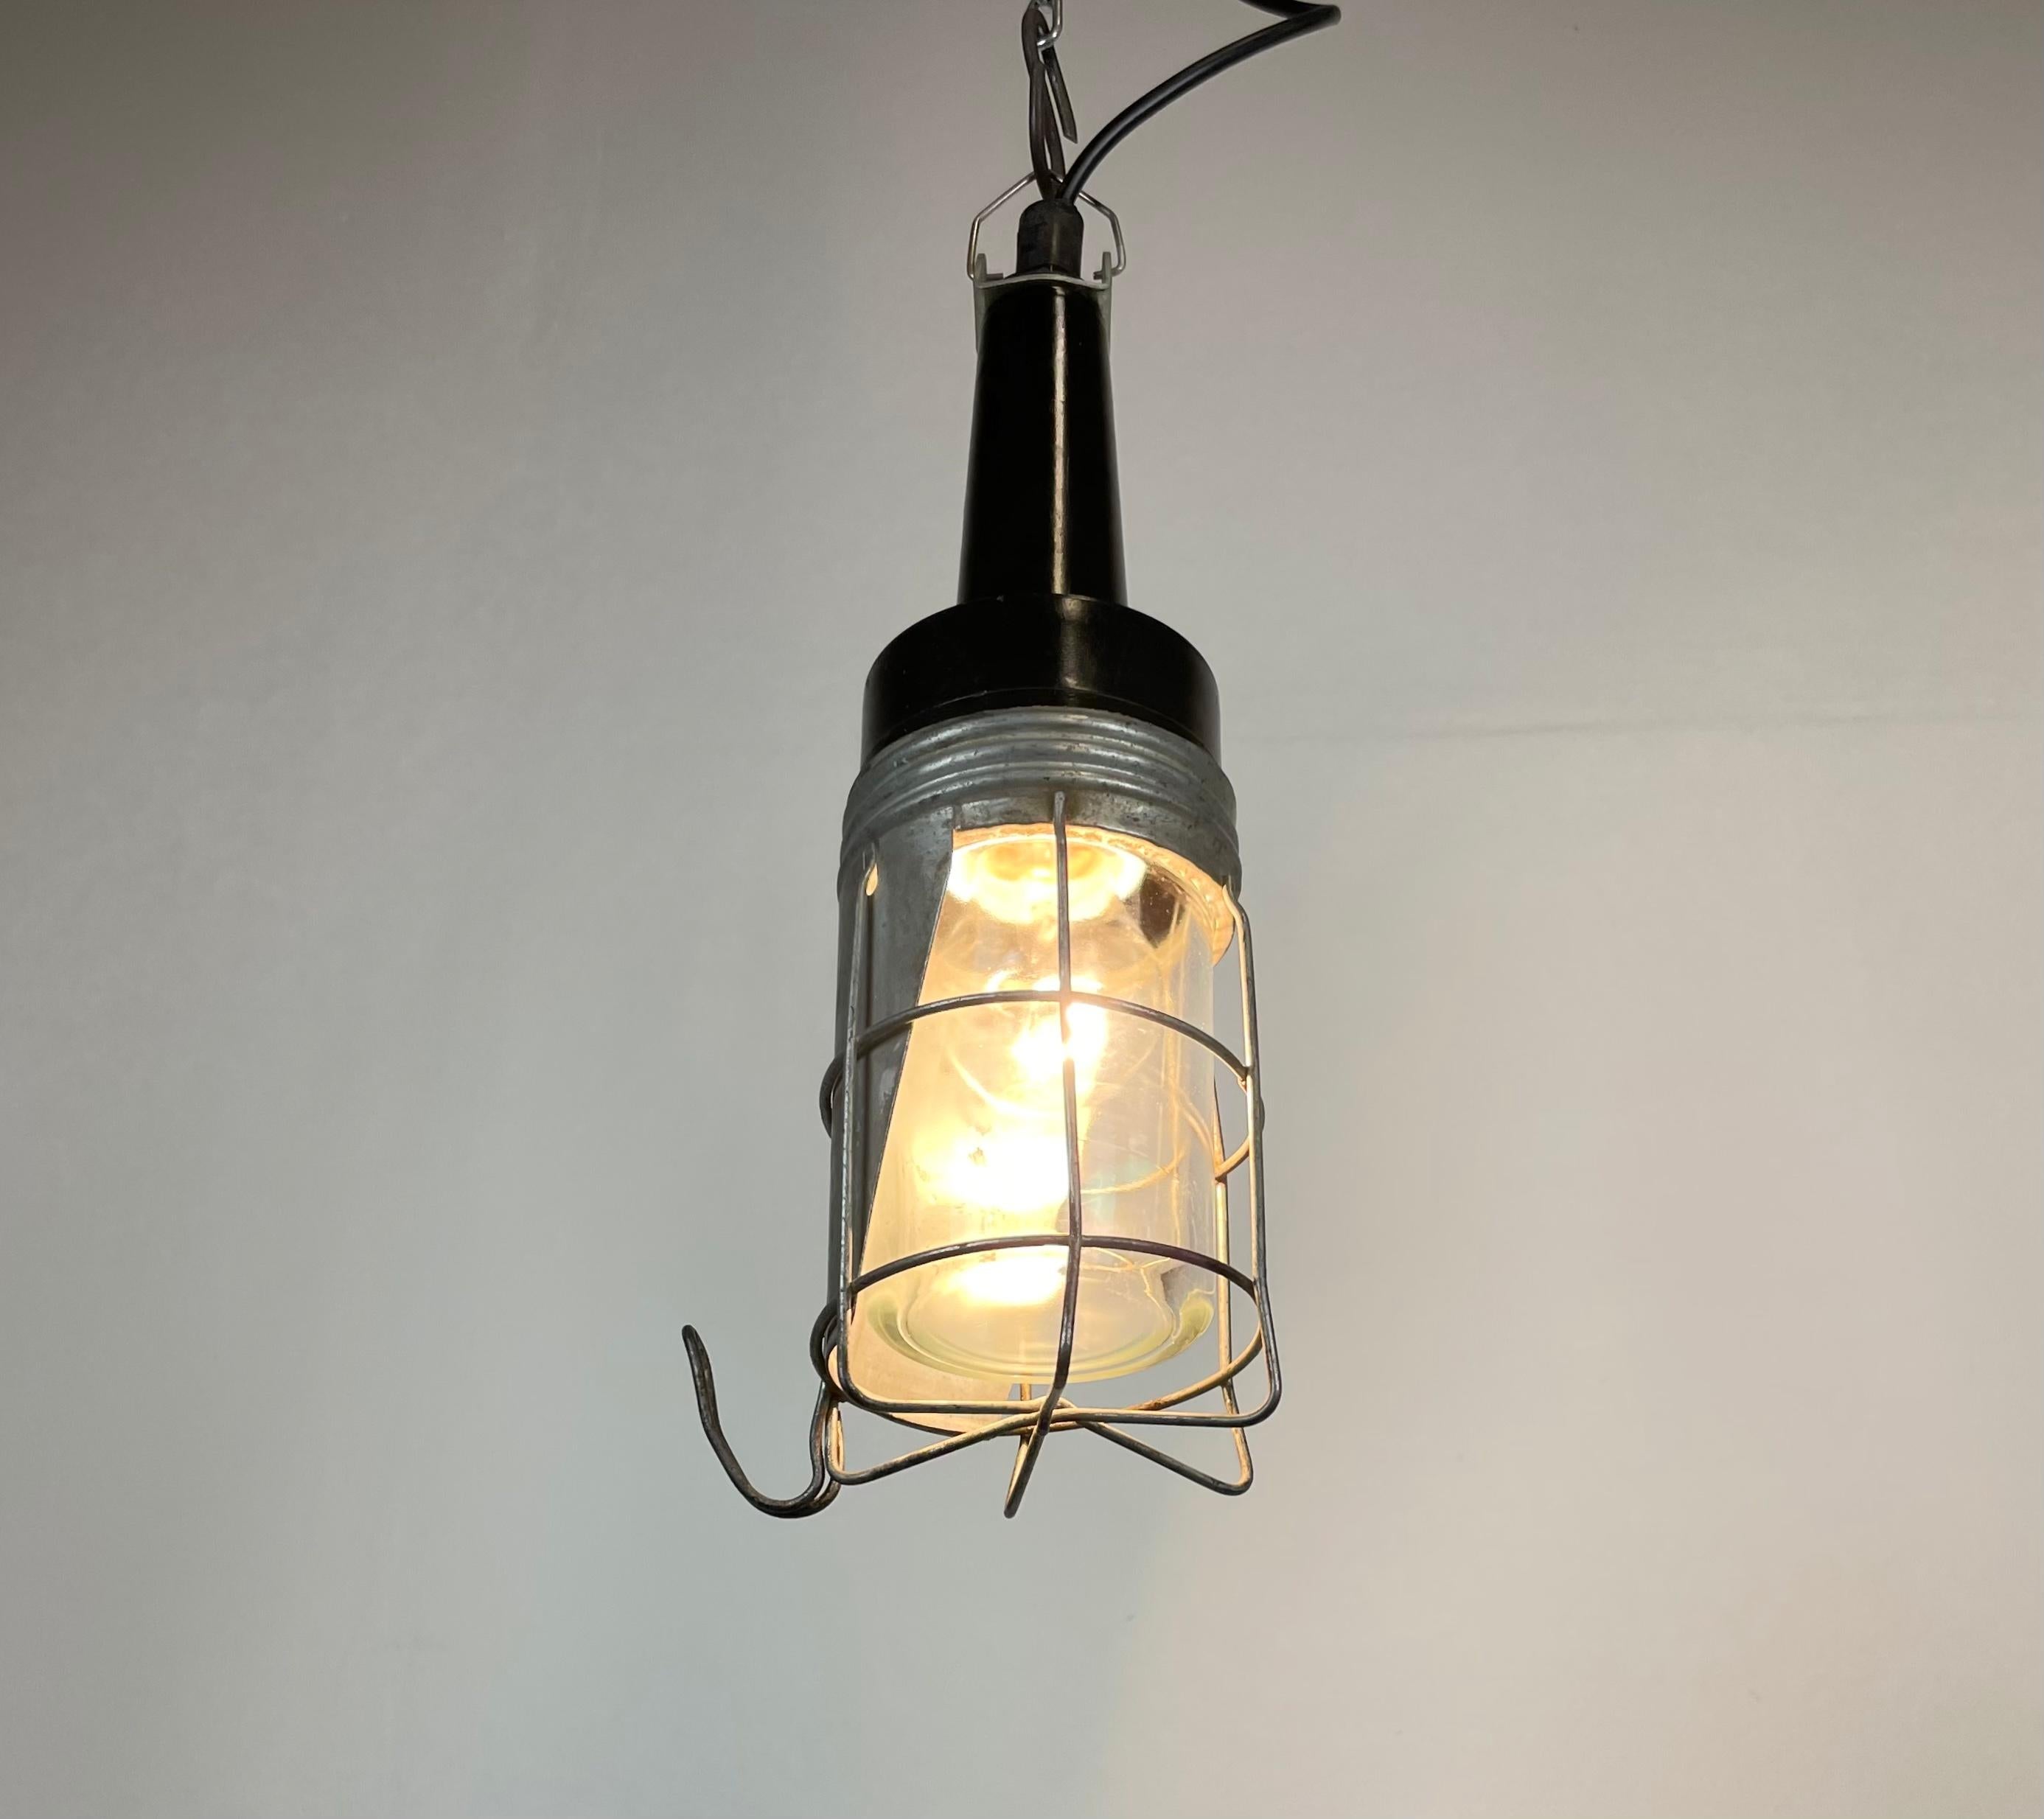 Vintage Industrial Bakelite Hanging Work Light, 1960s For Sale 3